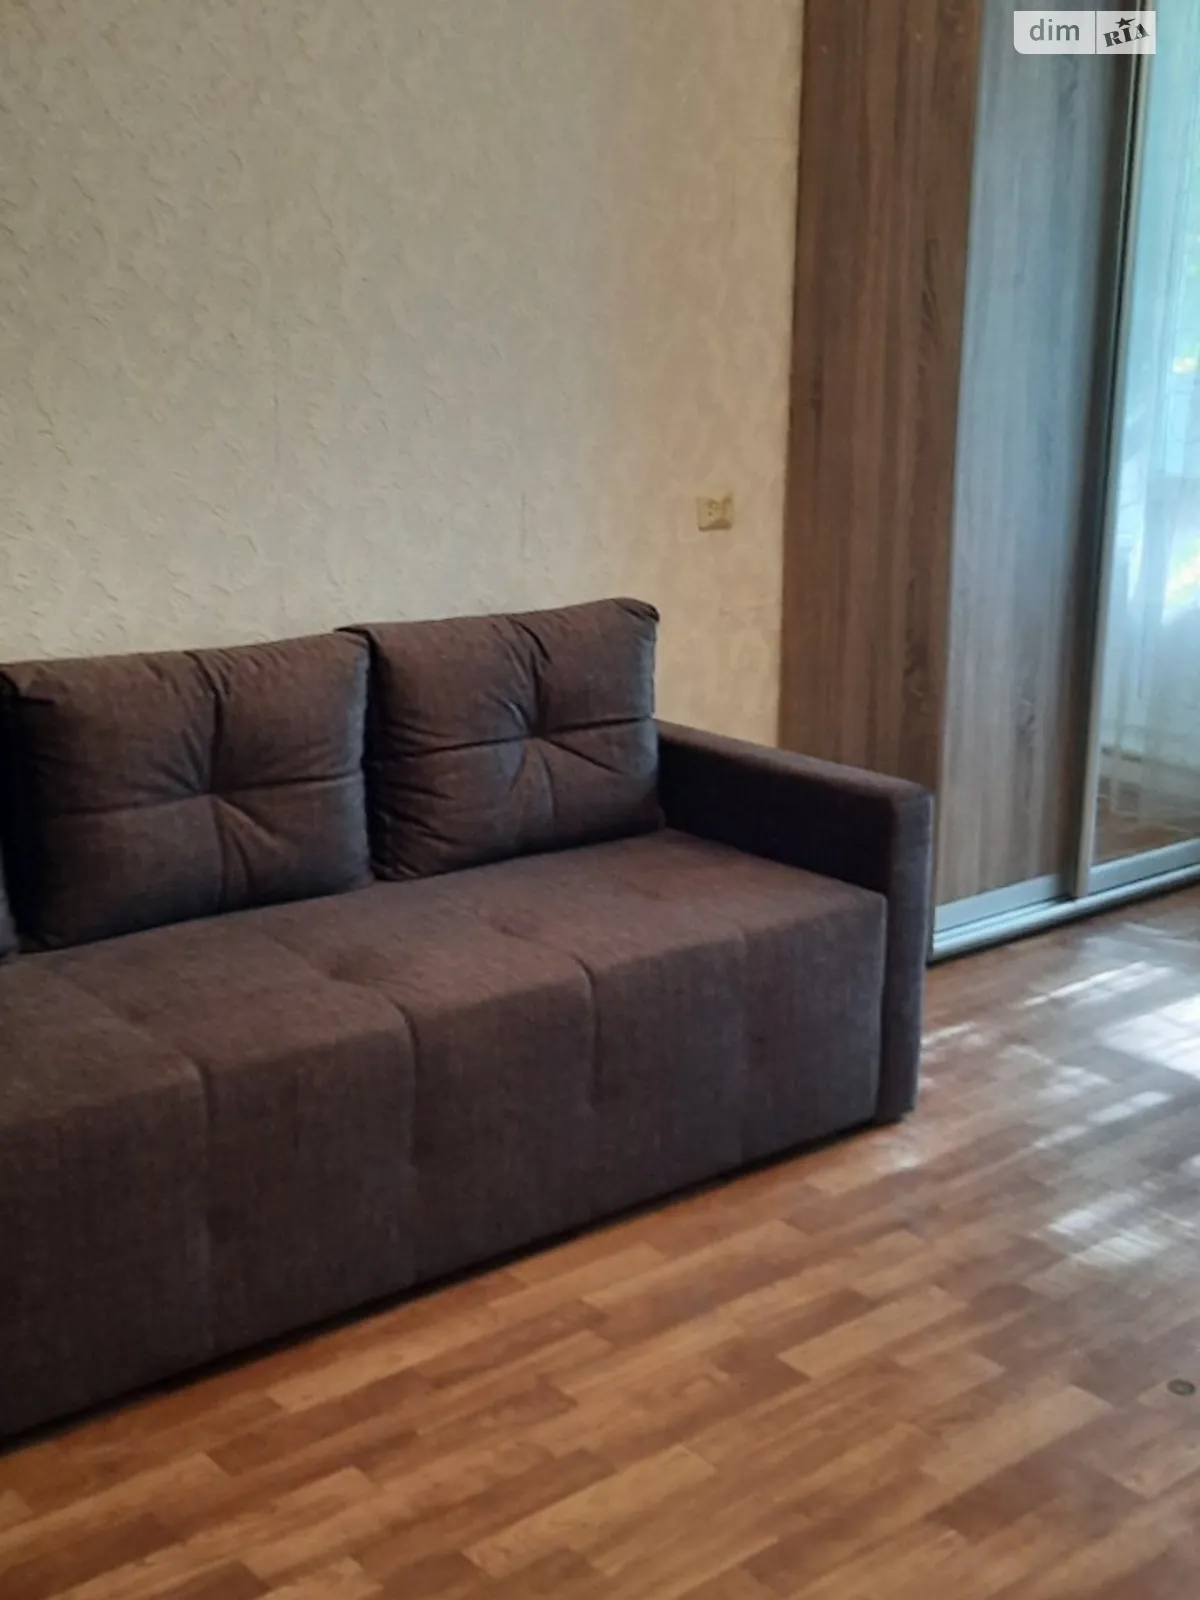 Сдается в аренду 2-комнатная квартира 54 кв. м в Николаеве - фото 3